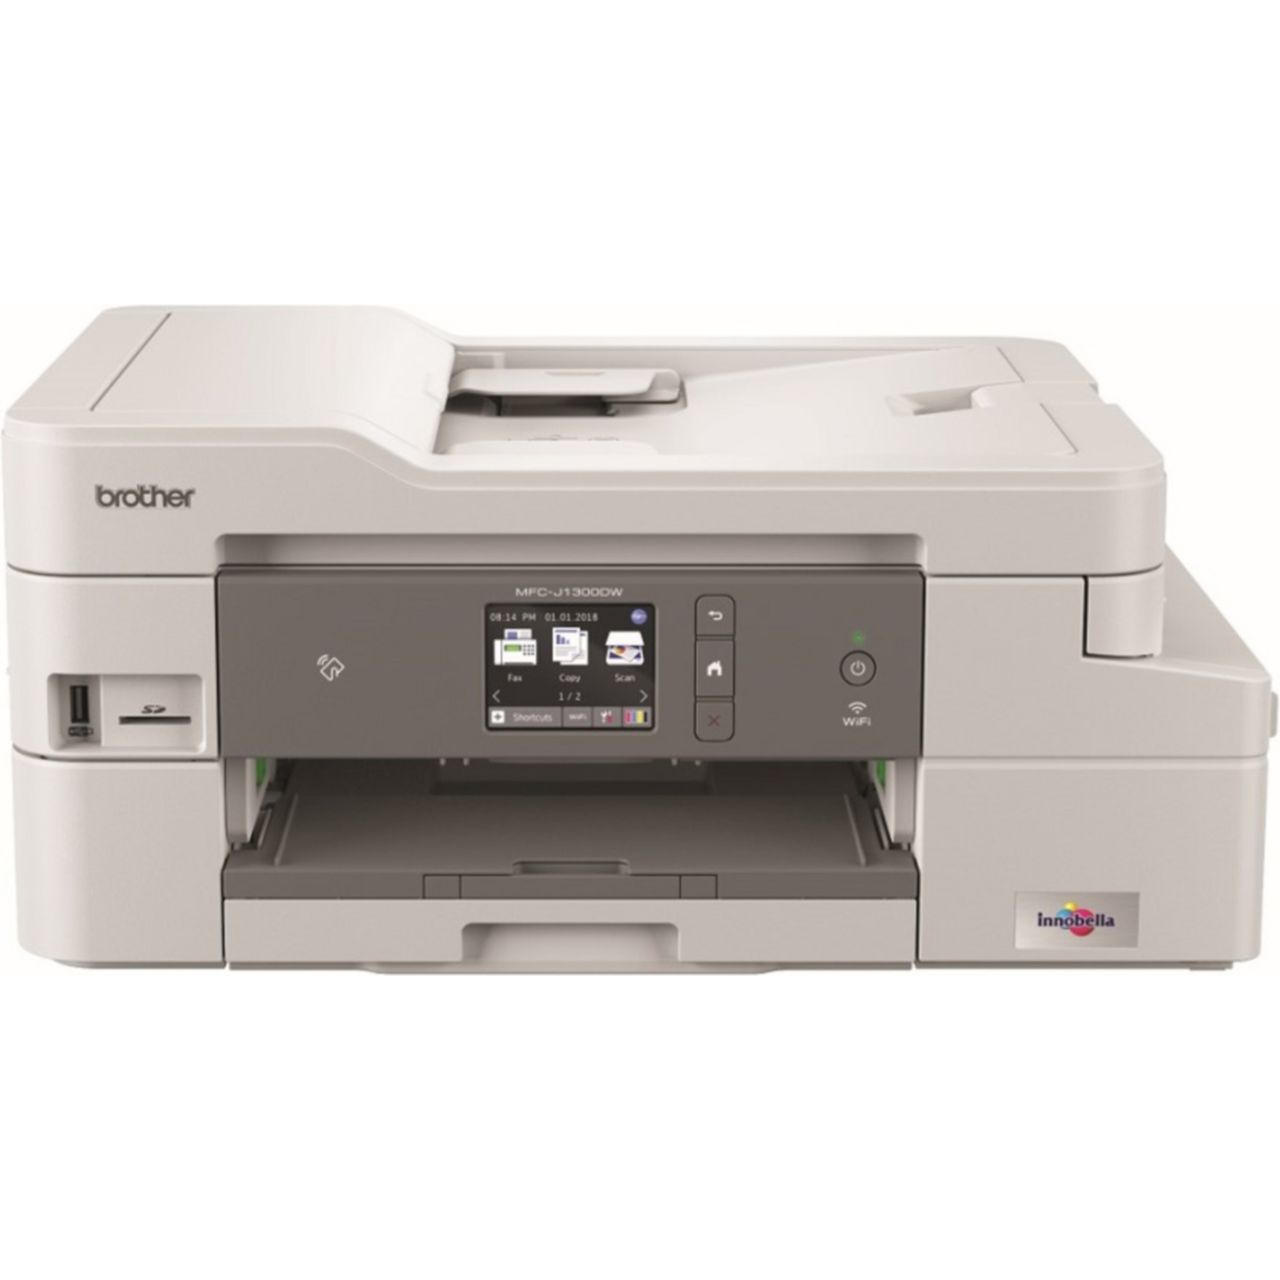 Brother MFCJ1300DW All In Box Inkjet Printer Review